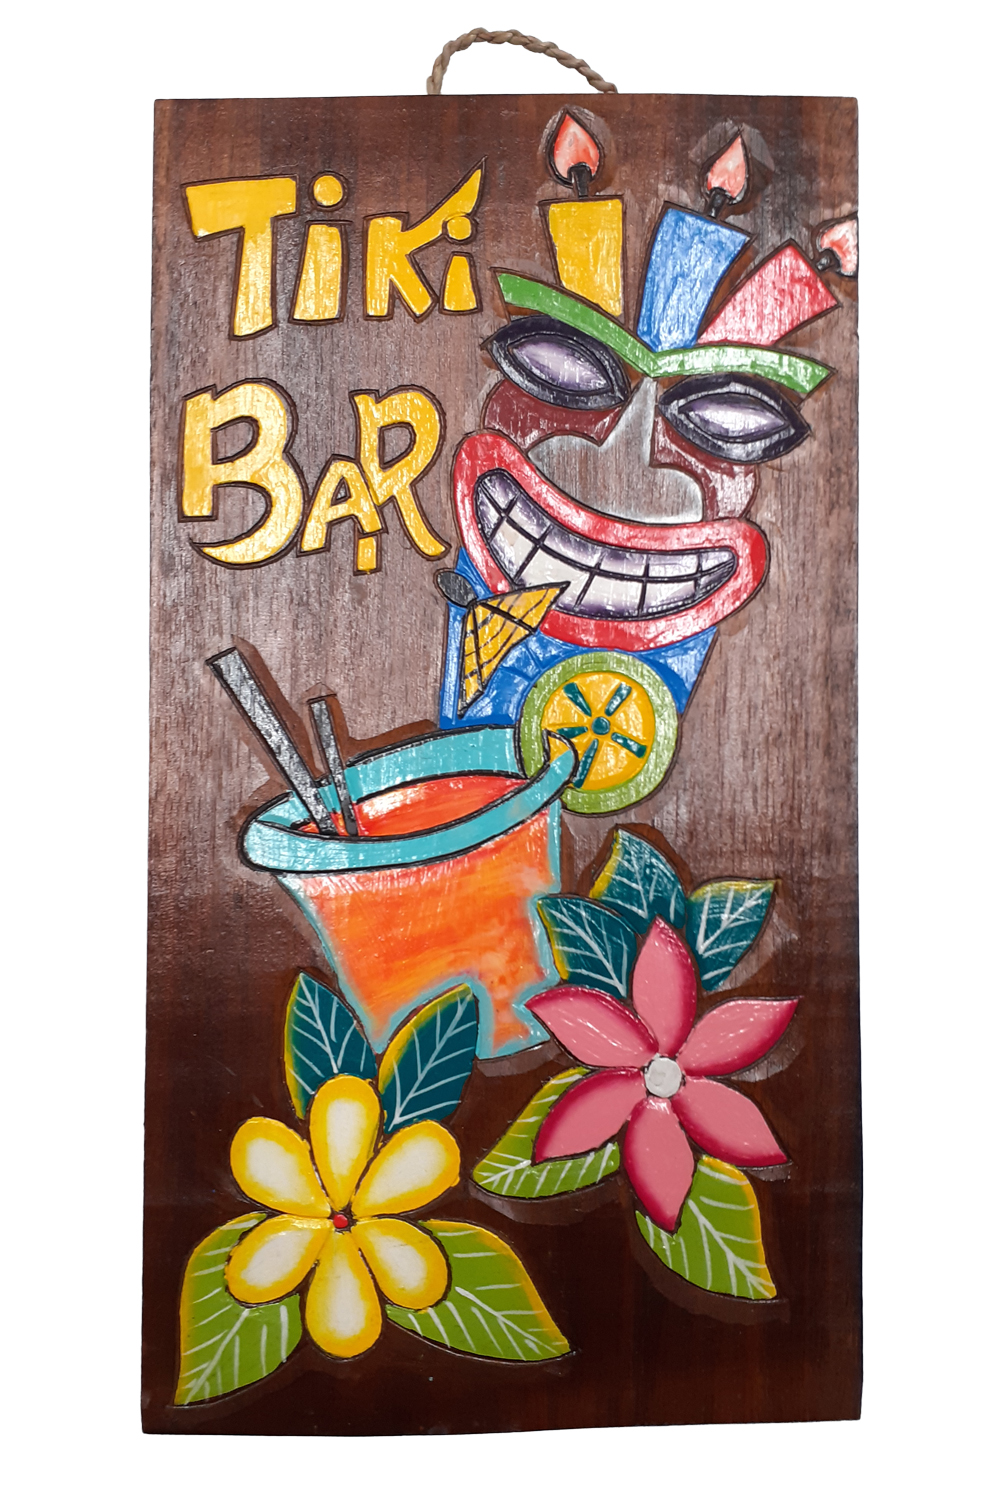 Tiki bar cocktail